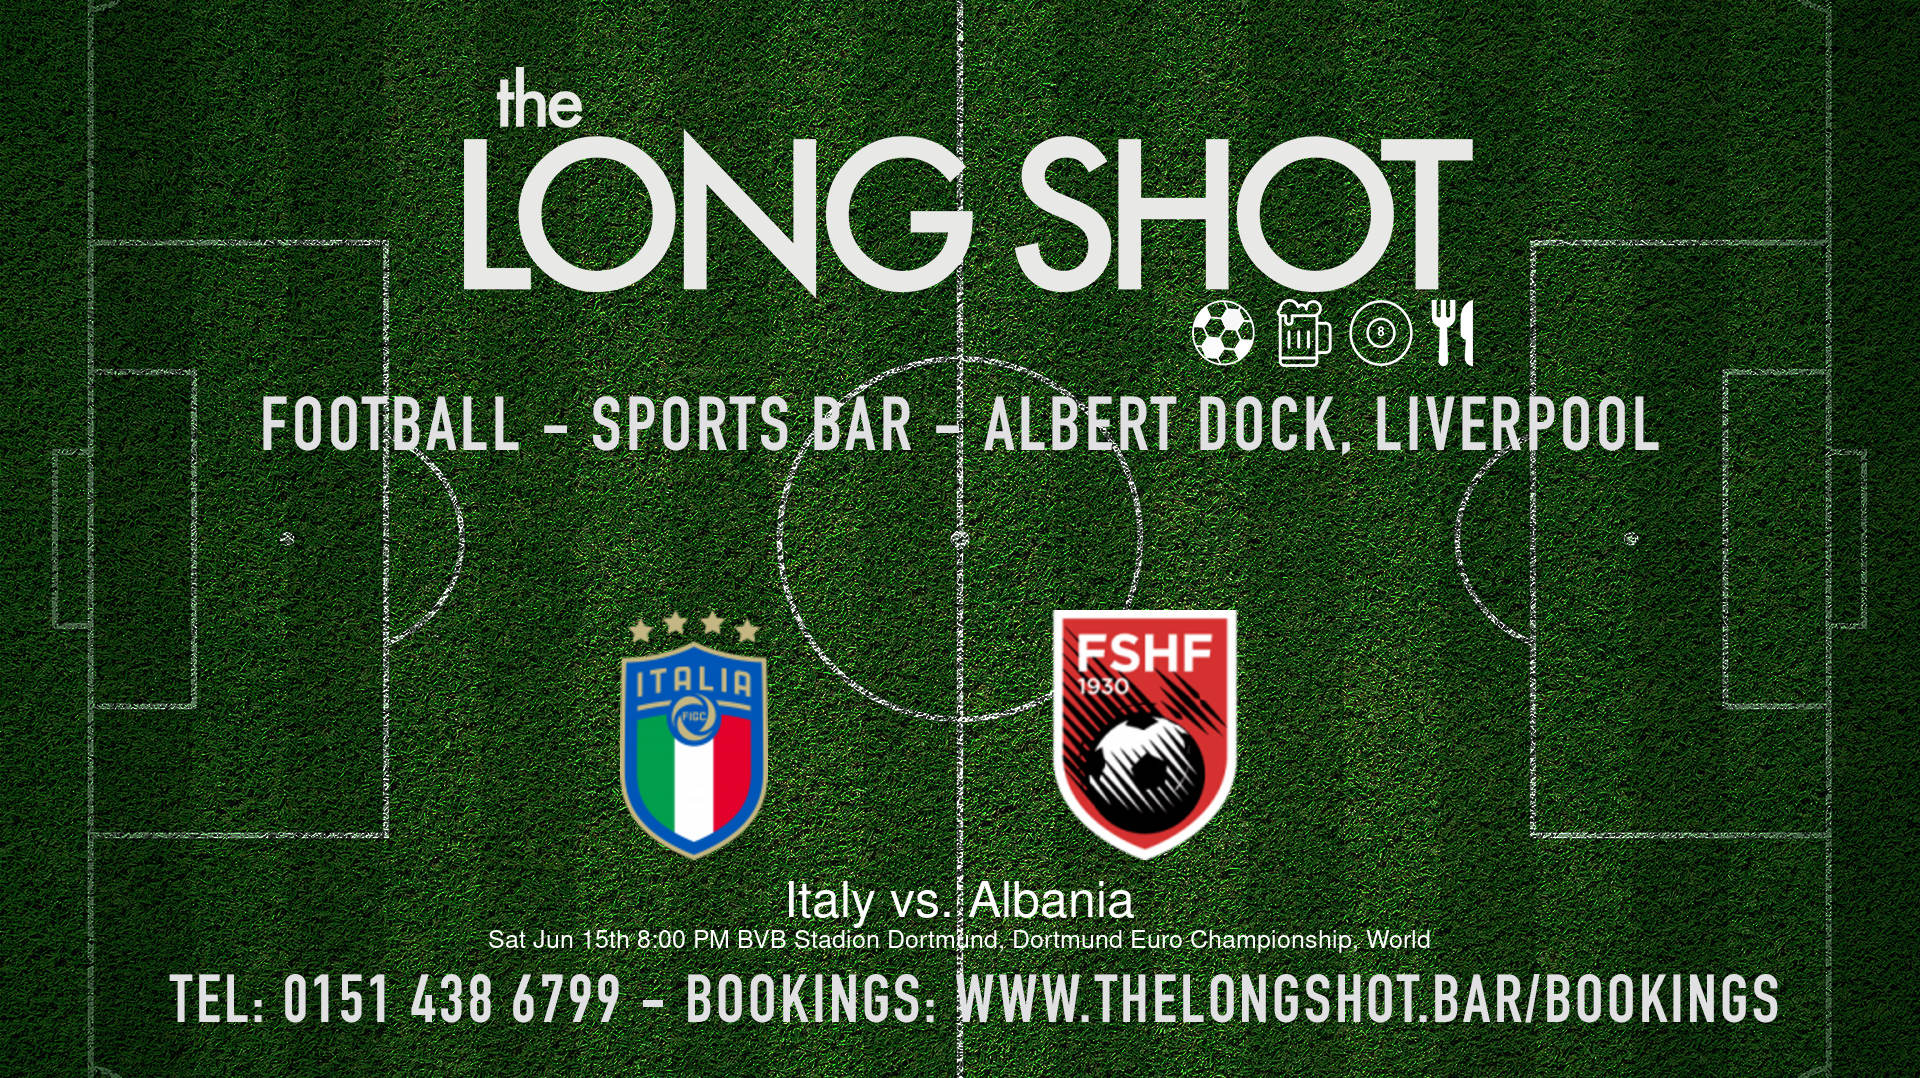 Event image - Italy vs. Albania